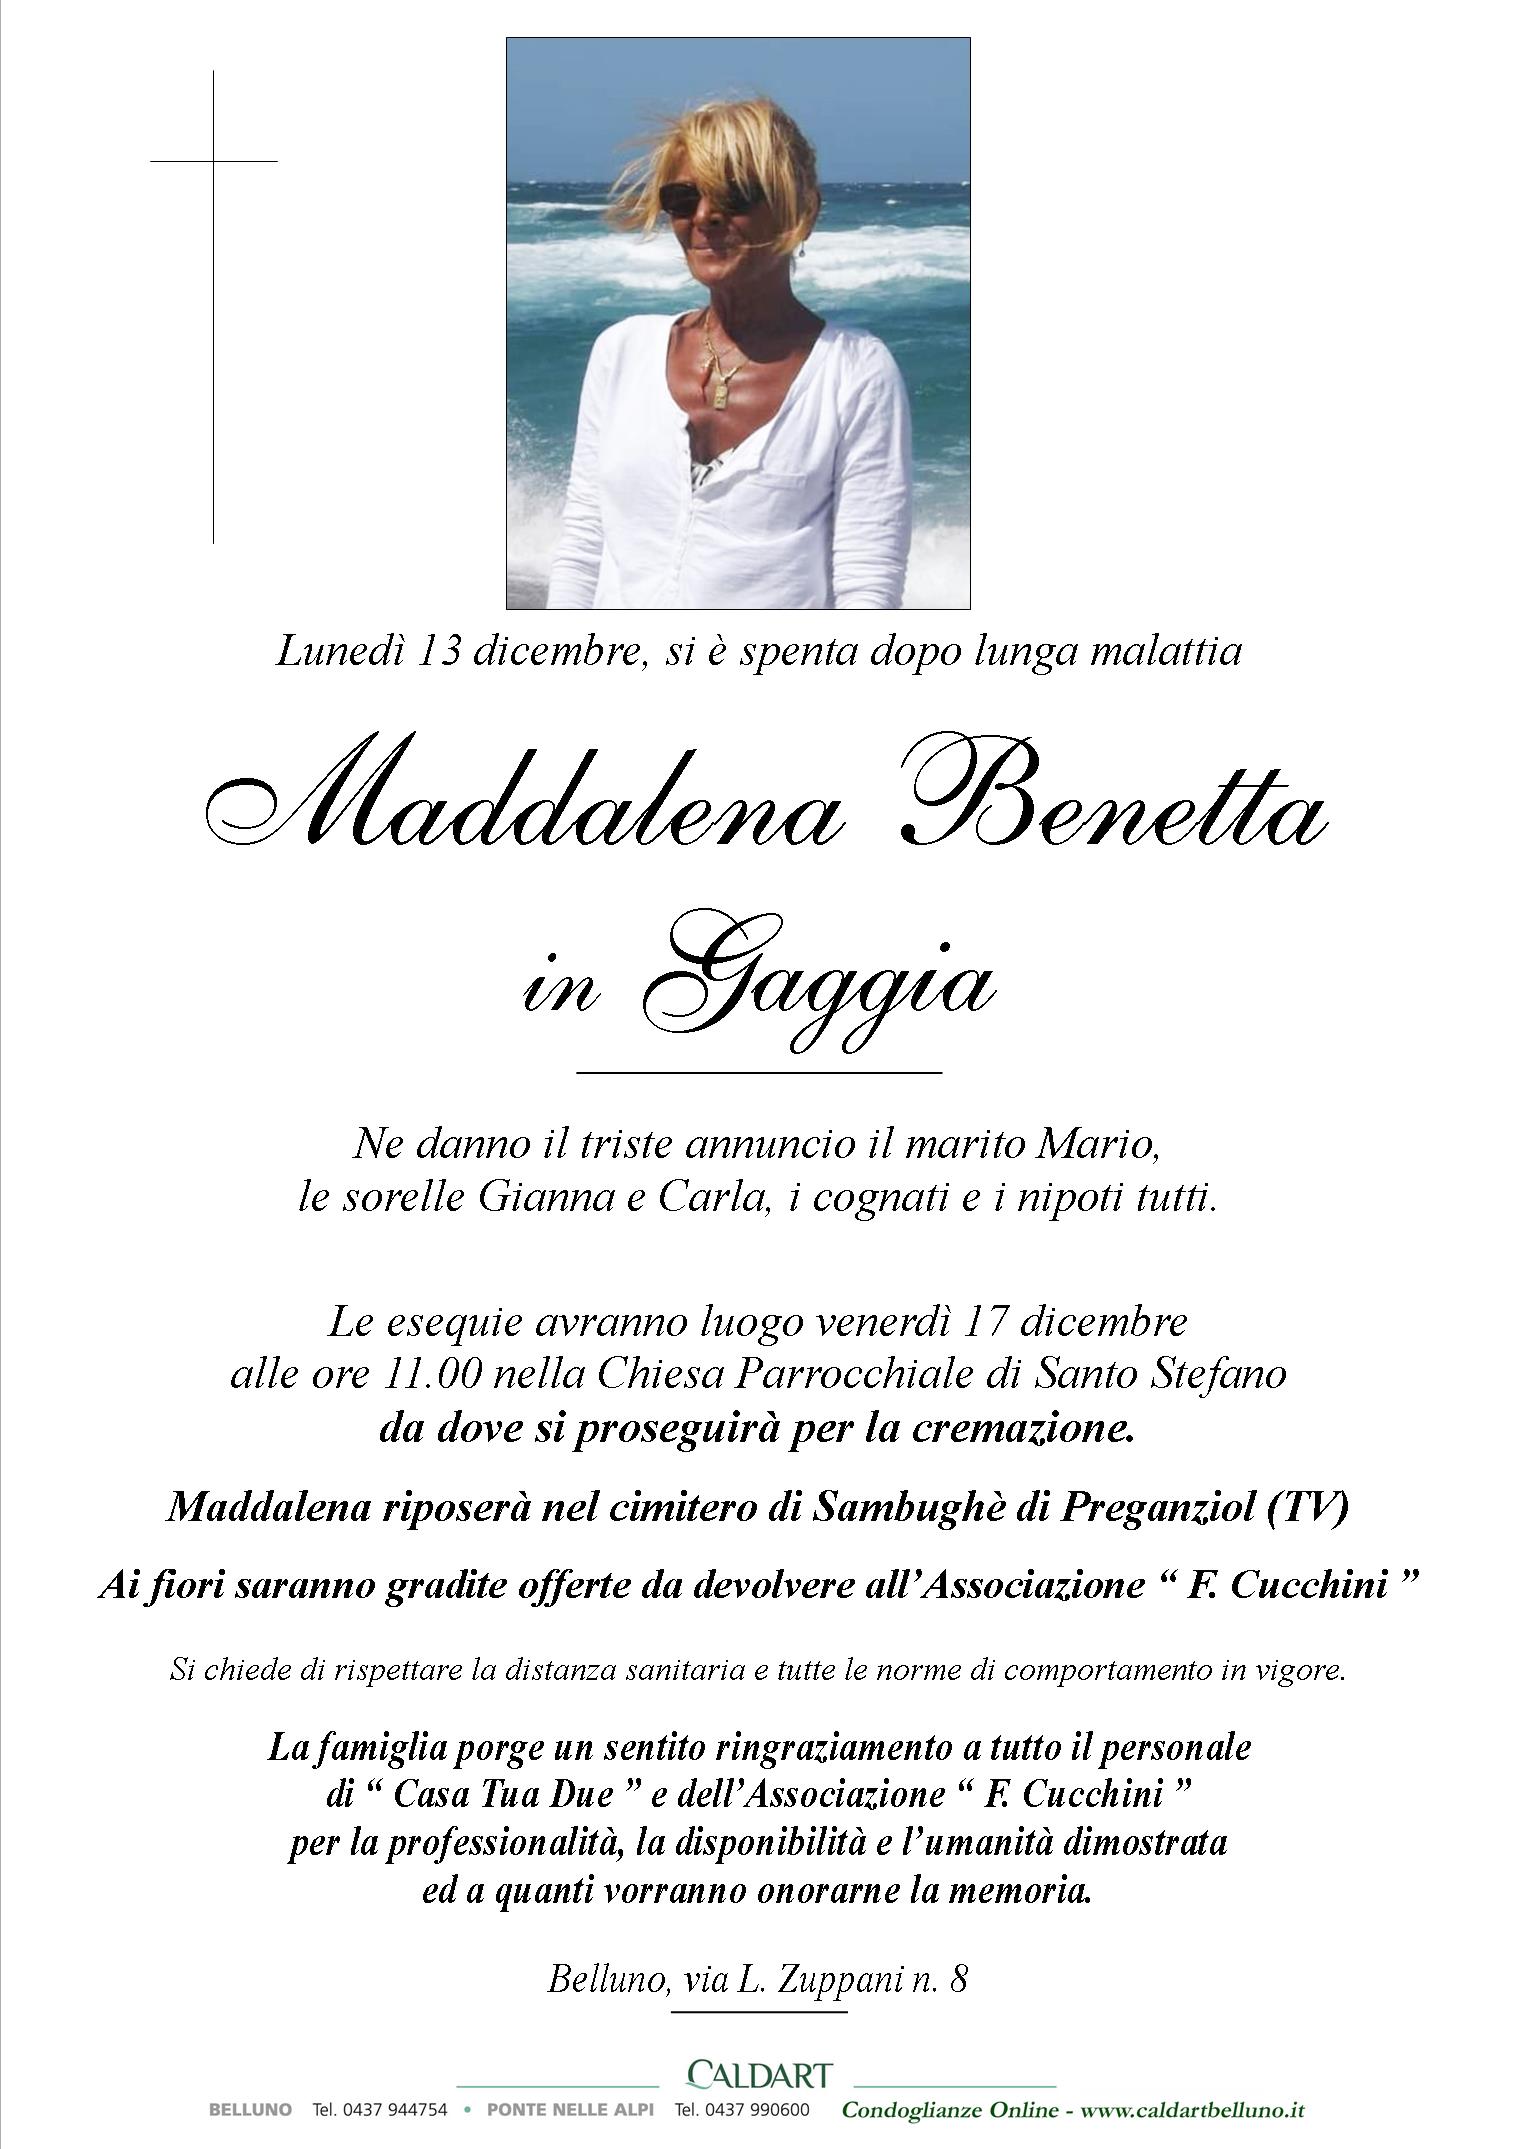 Benetta Maddalena